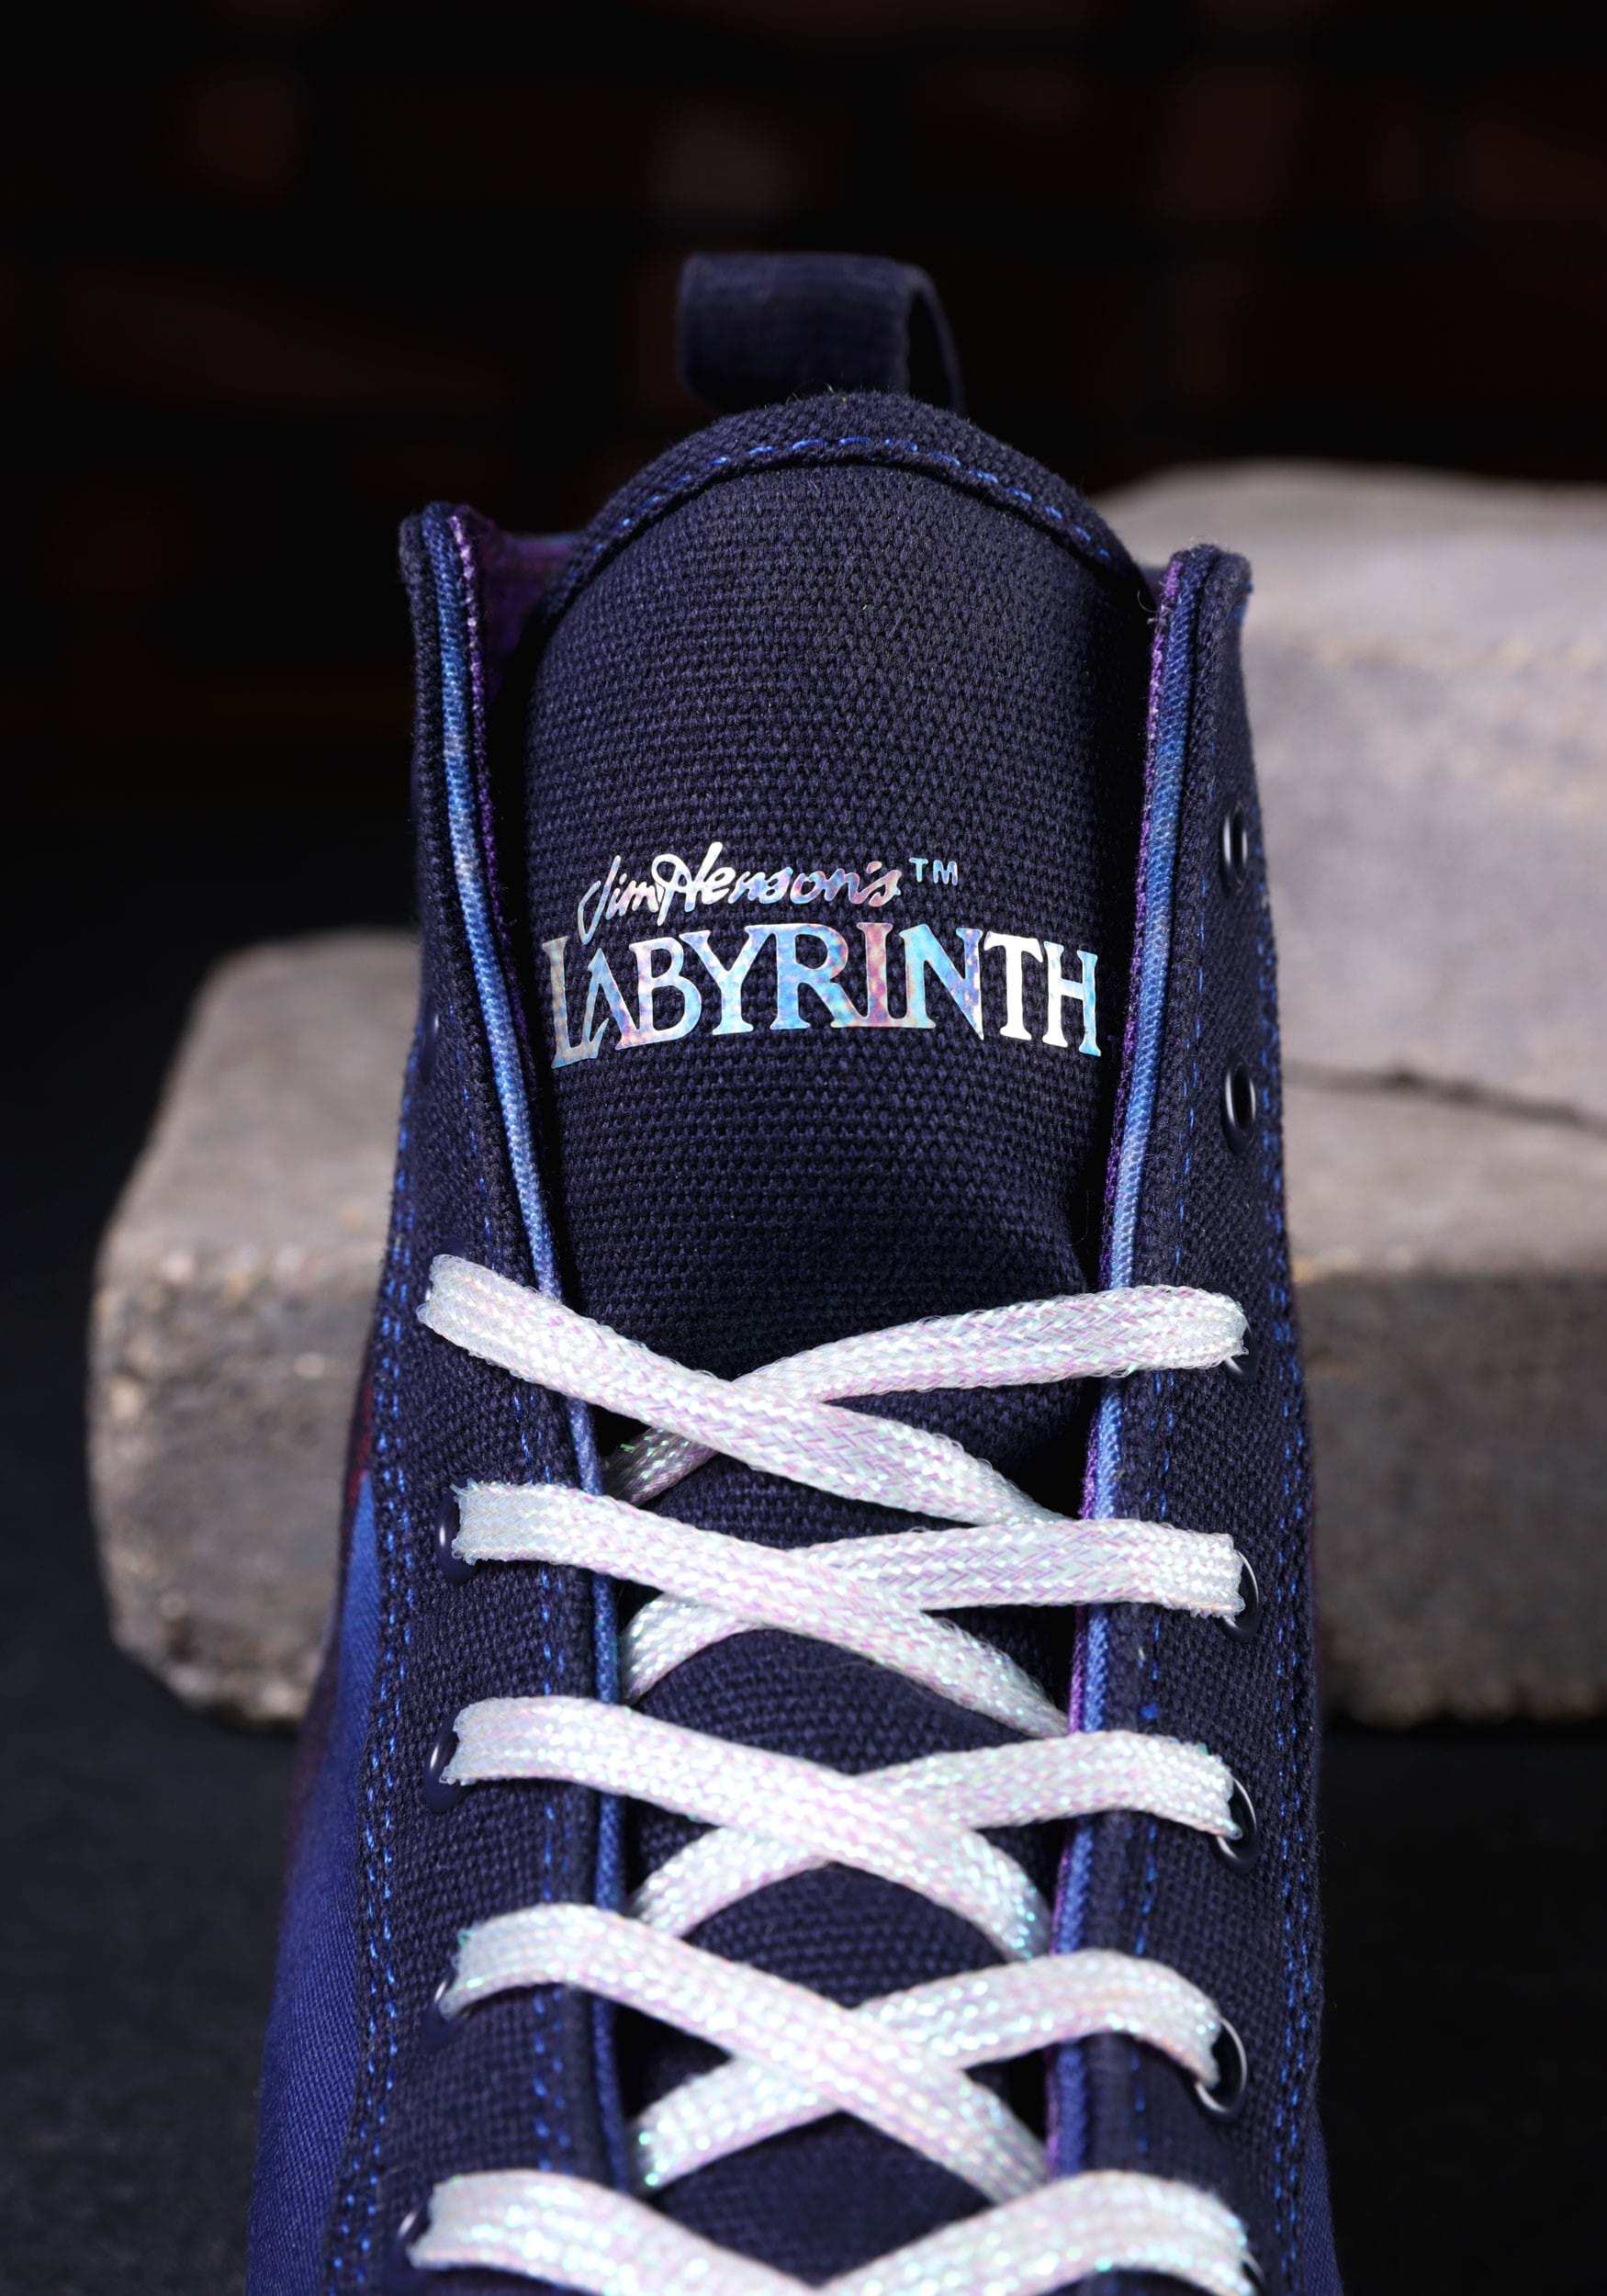 Labyrinth Shoes